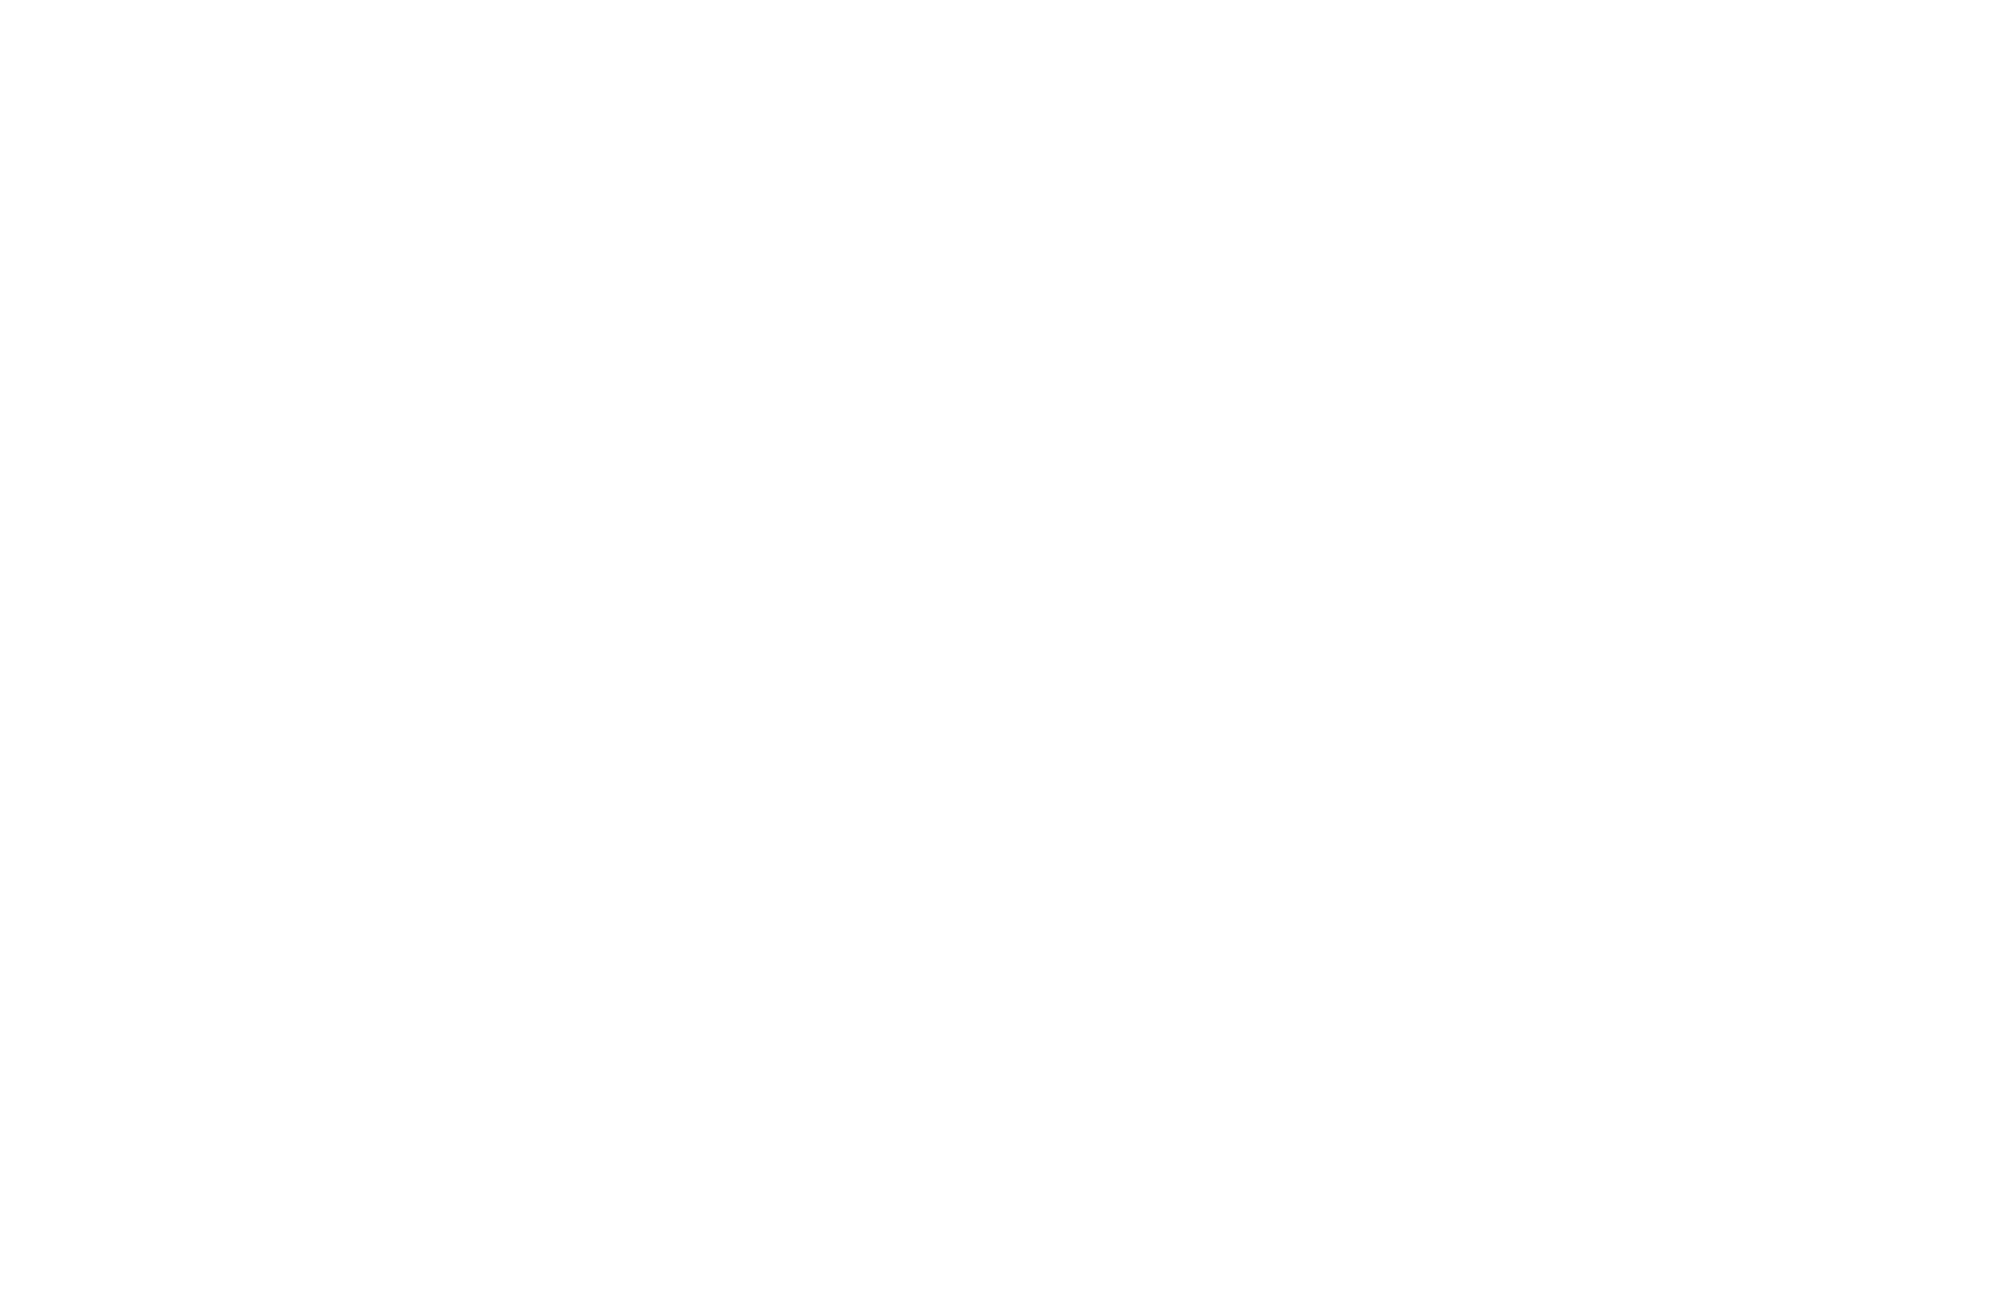 carlo-app-logo-white-payment-app-monaco